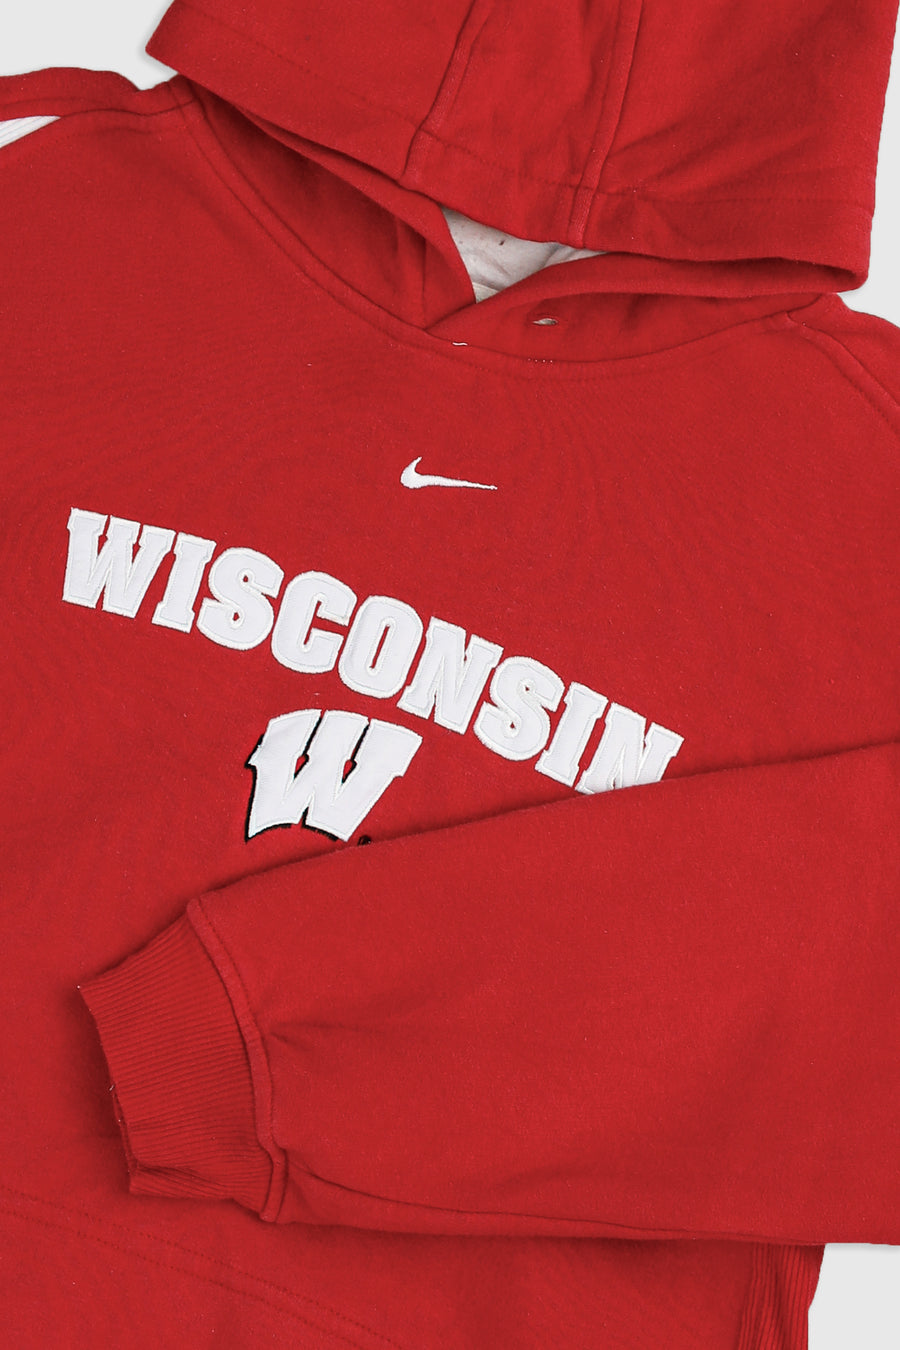 Vintage Nike Wisconsin Sweatshirt - Women's M